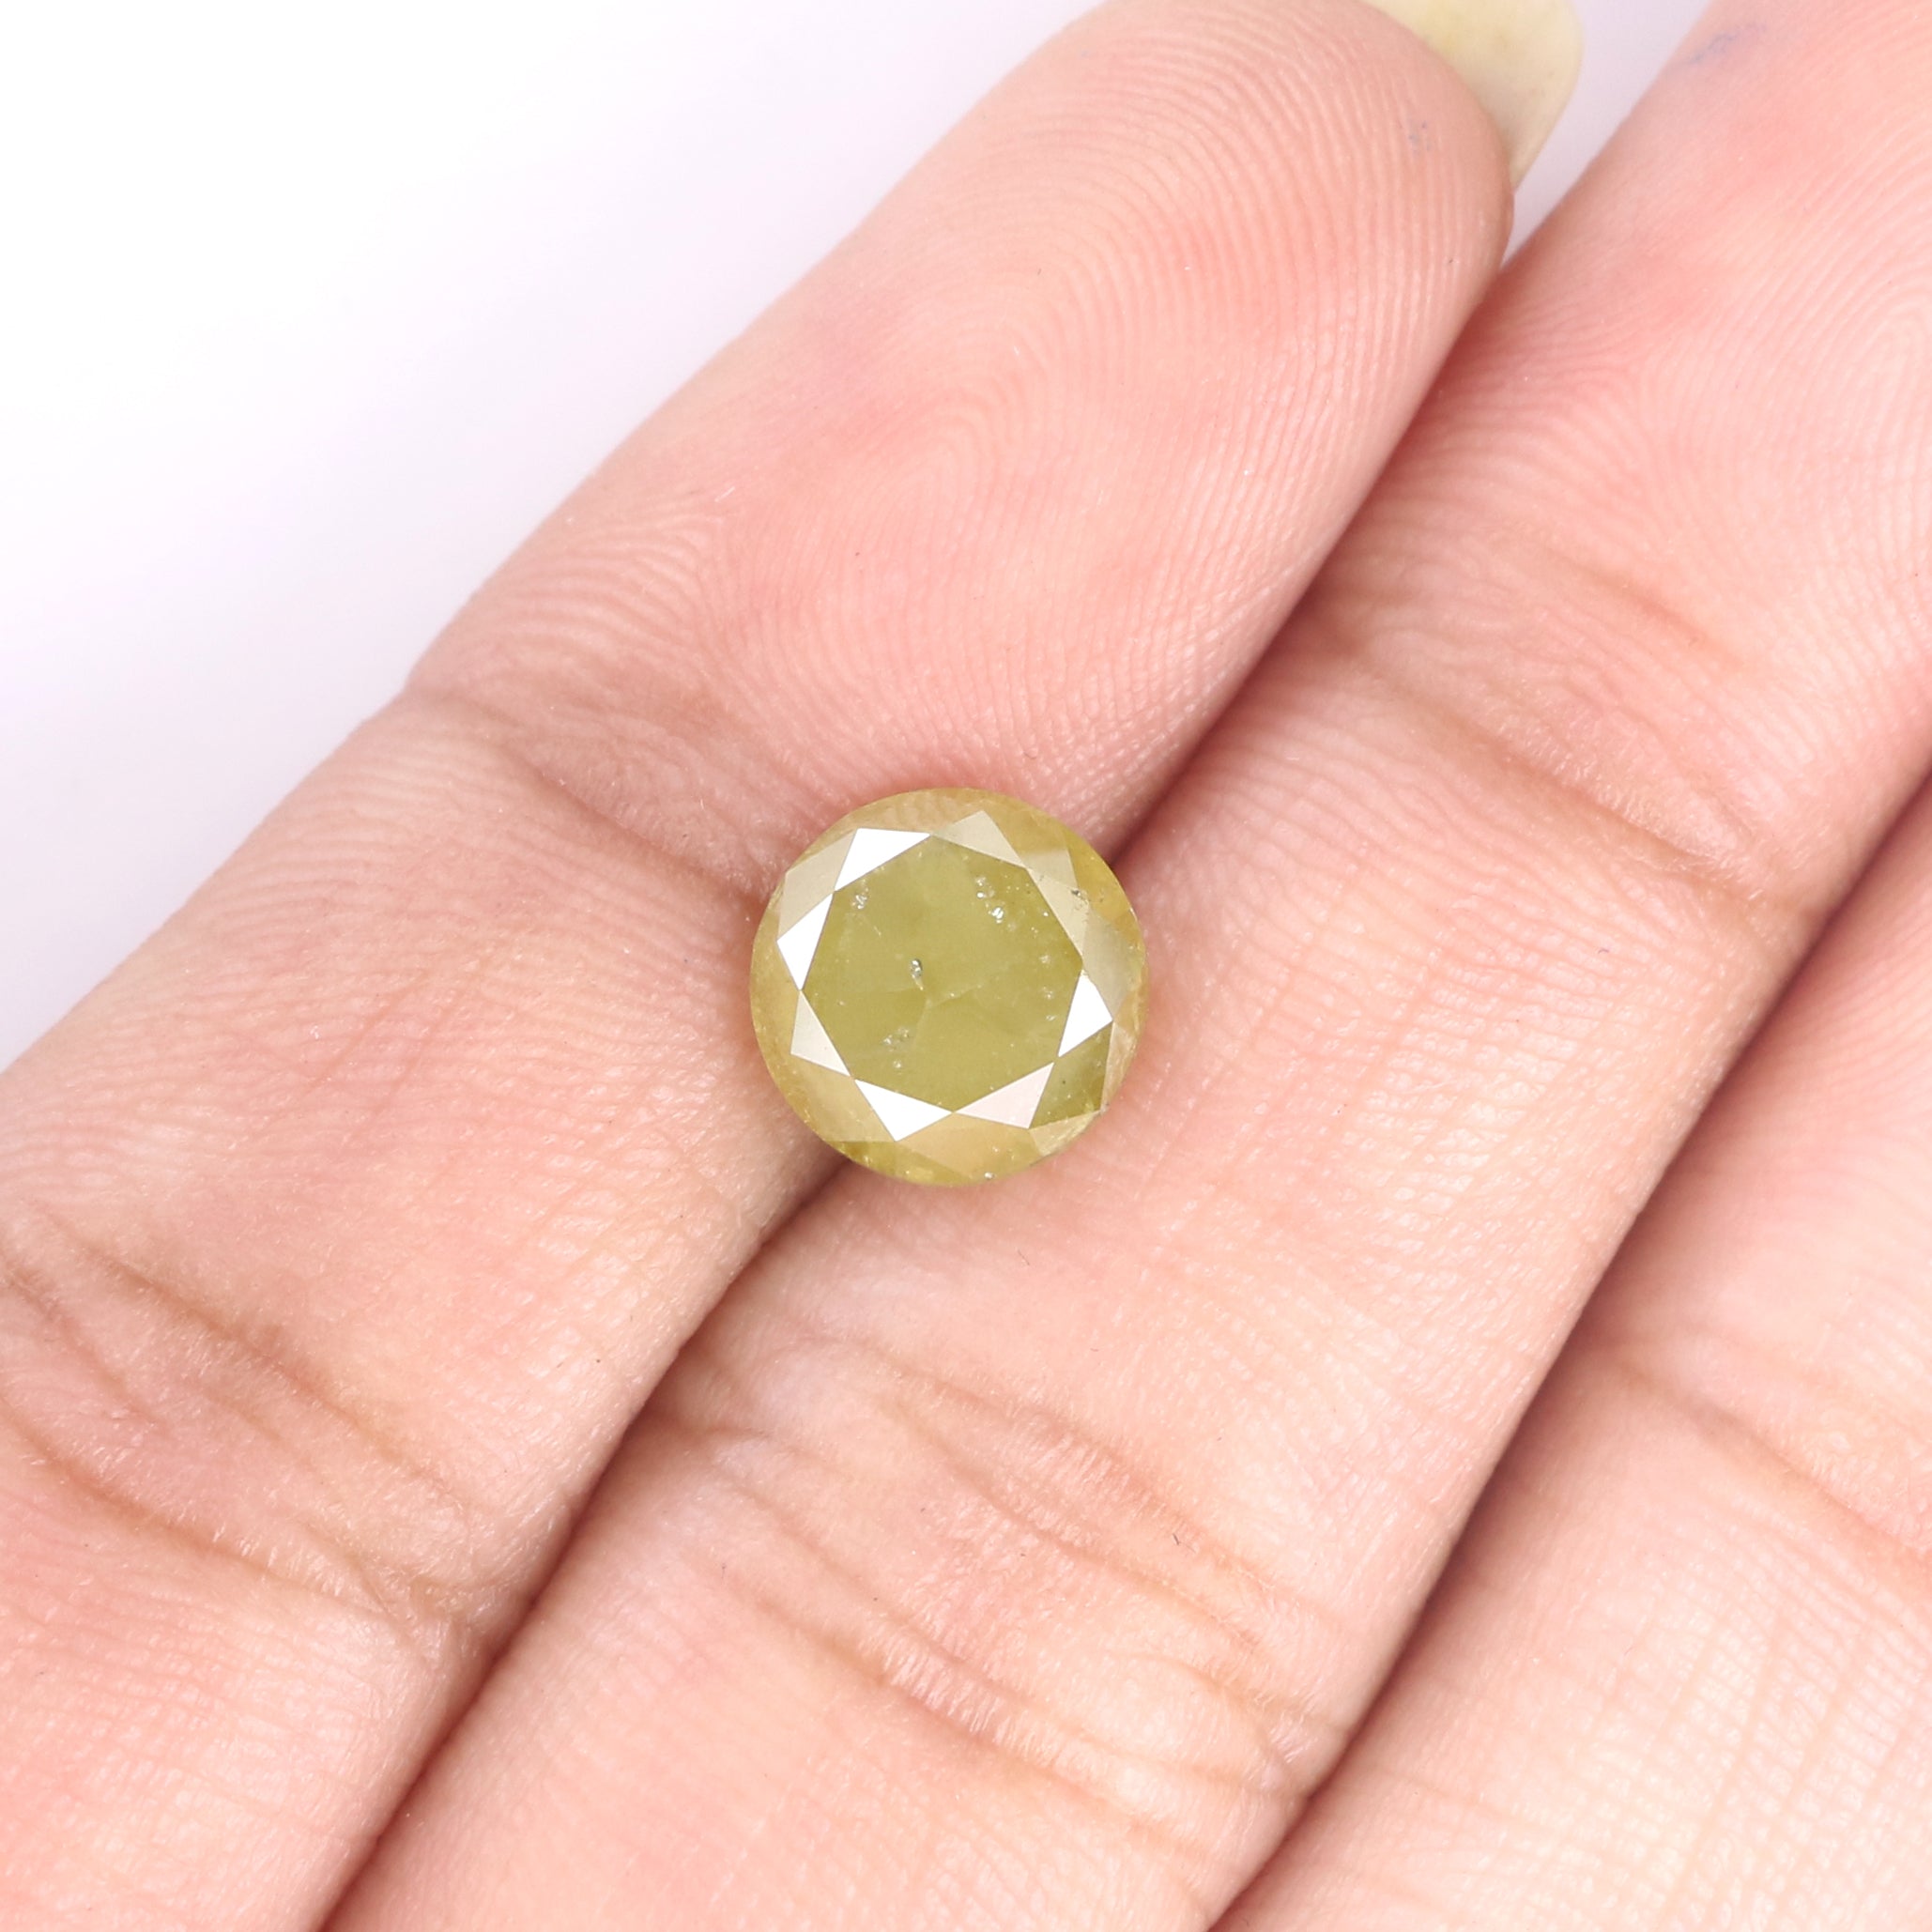 Natural Loose Round Yellow Color Diamond 2.24 CT 7.75 MM Round Shape Brilliant Cut Diamond L9966